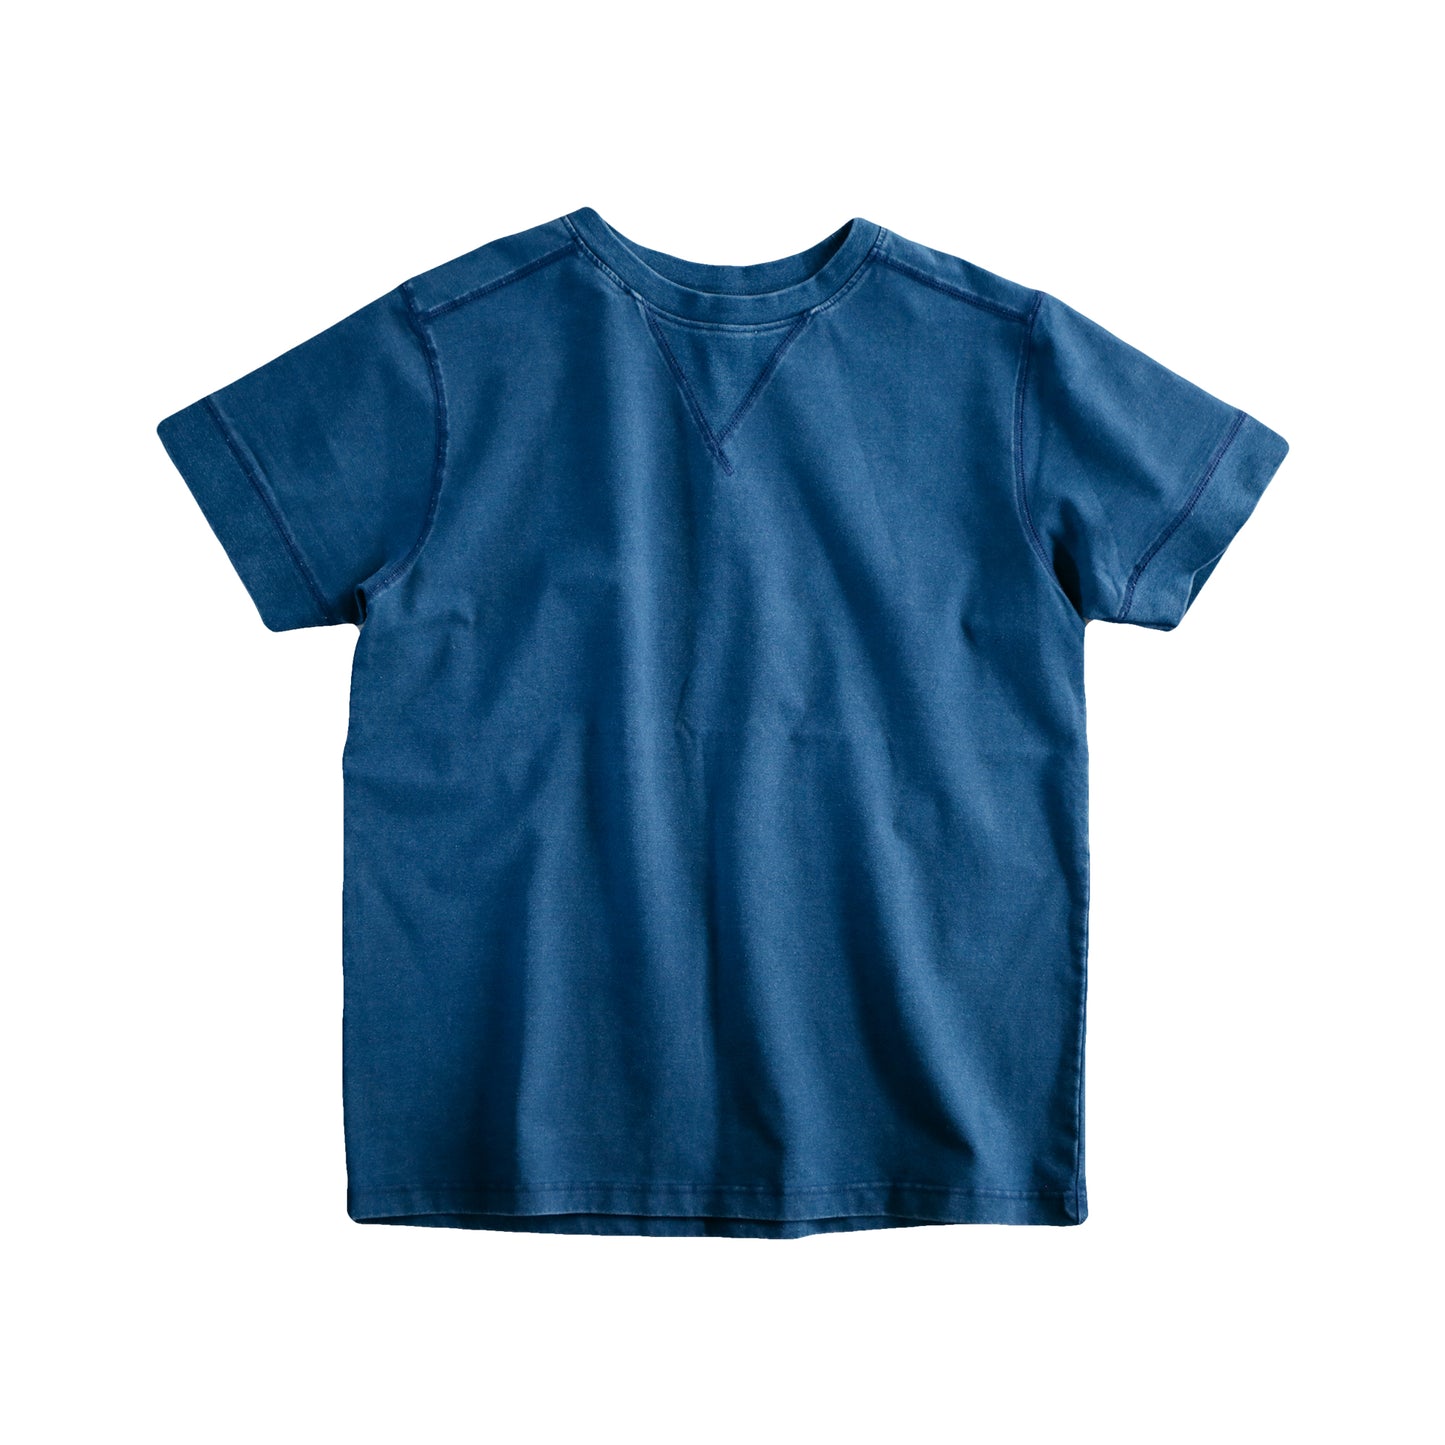 Indigo Dye Col. / Denim T-shirt - SS